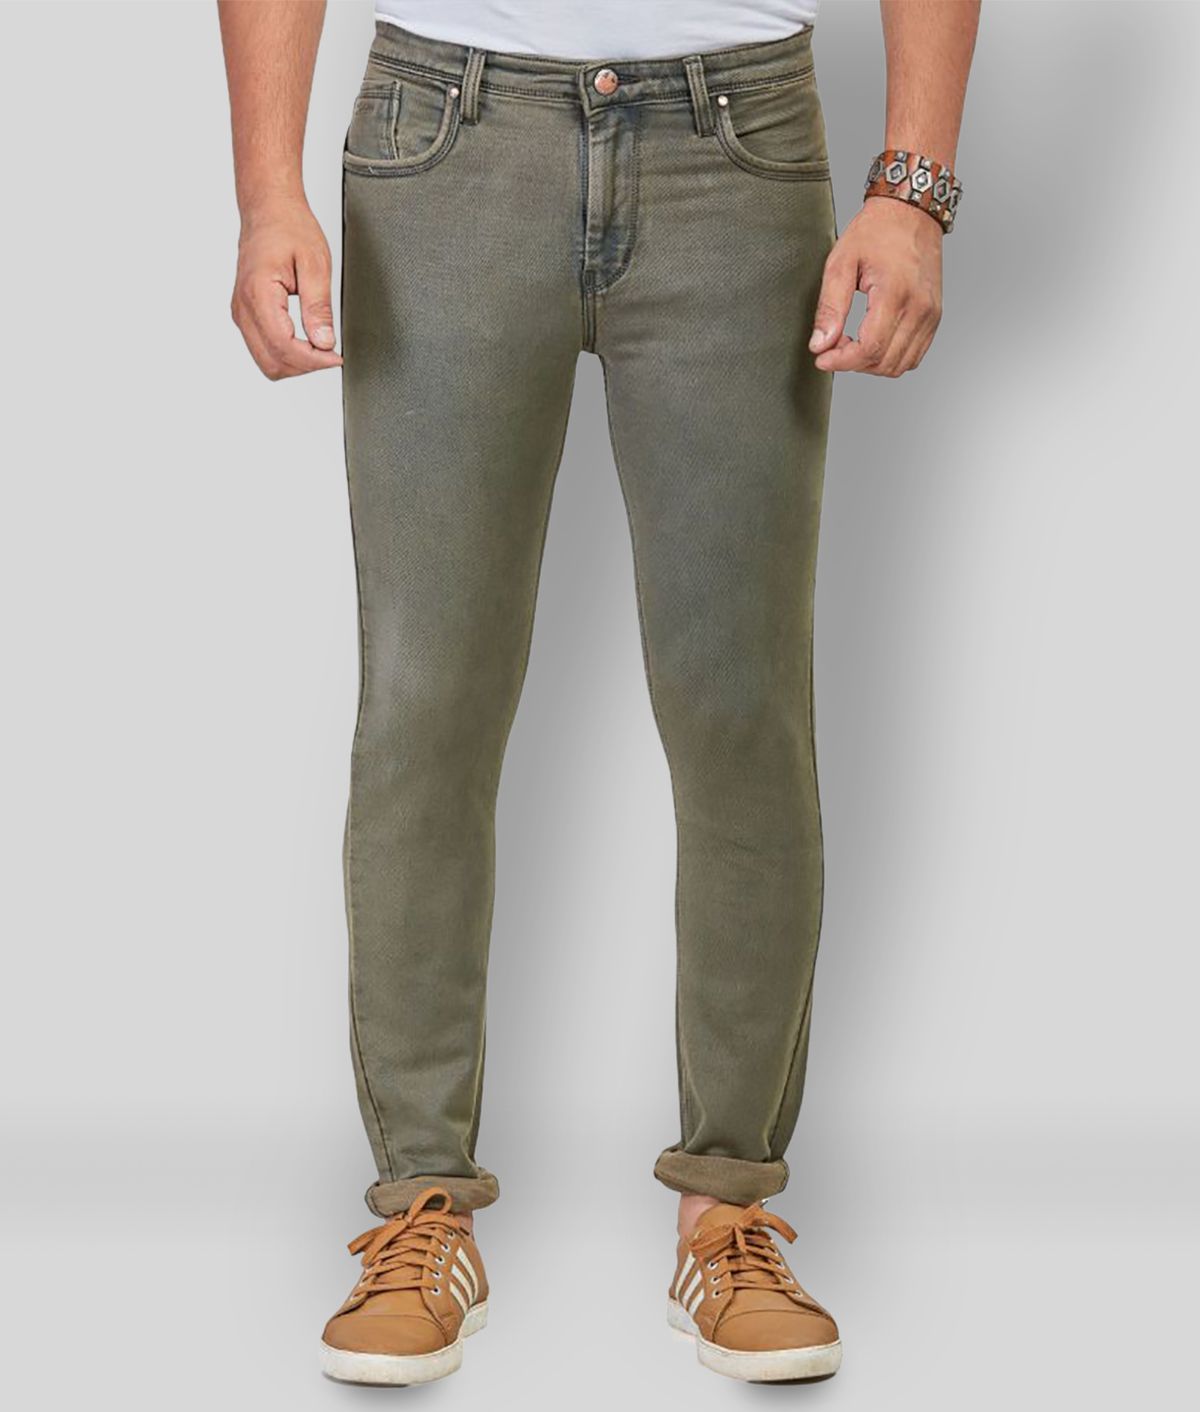 HJ HASASI - Olive Green Cotton Blend Regular Fit Men's Jeans ( Pack of 1 )